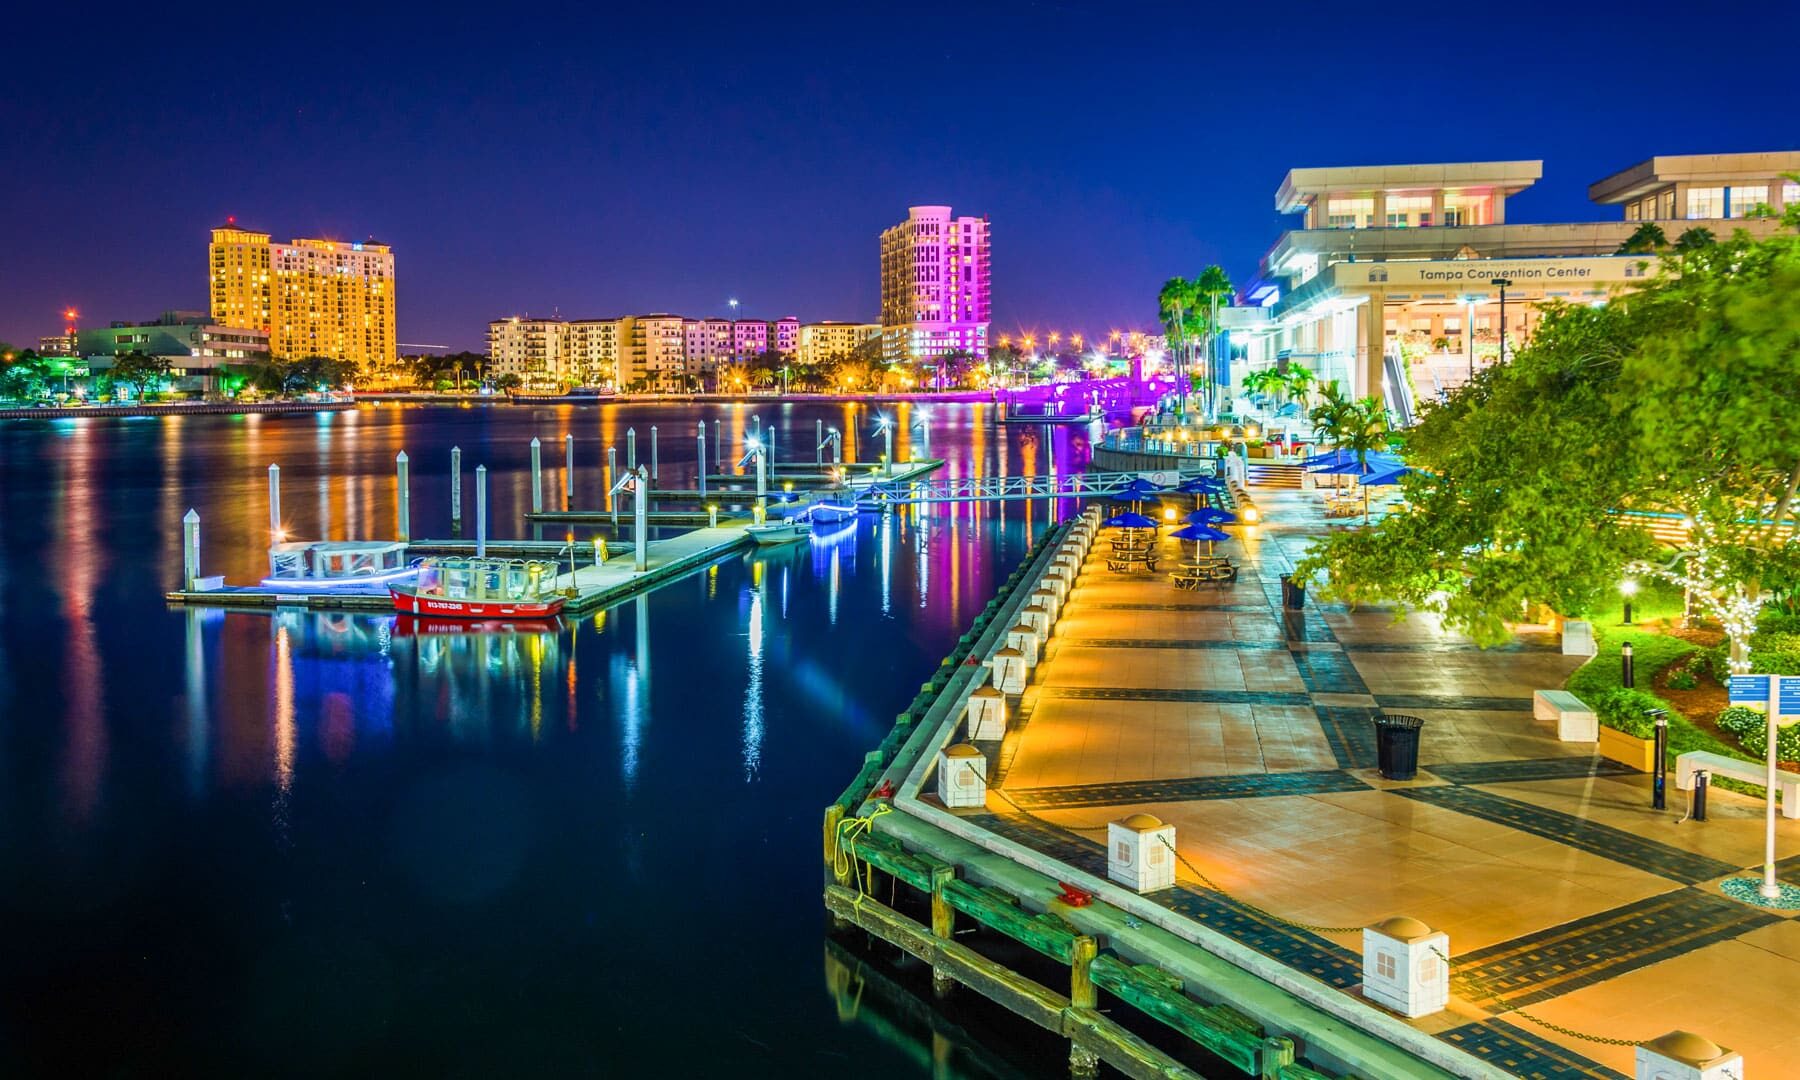 The Best Restaurants in Tampa, Florida